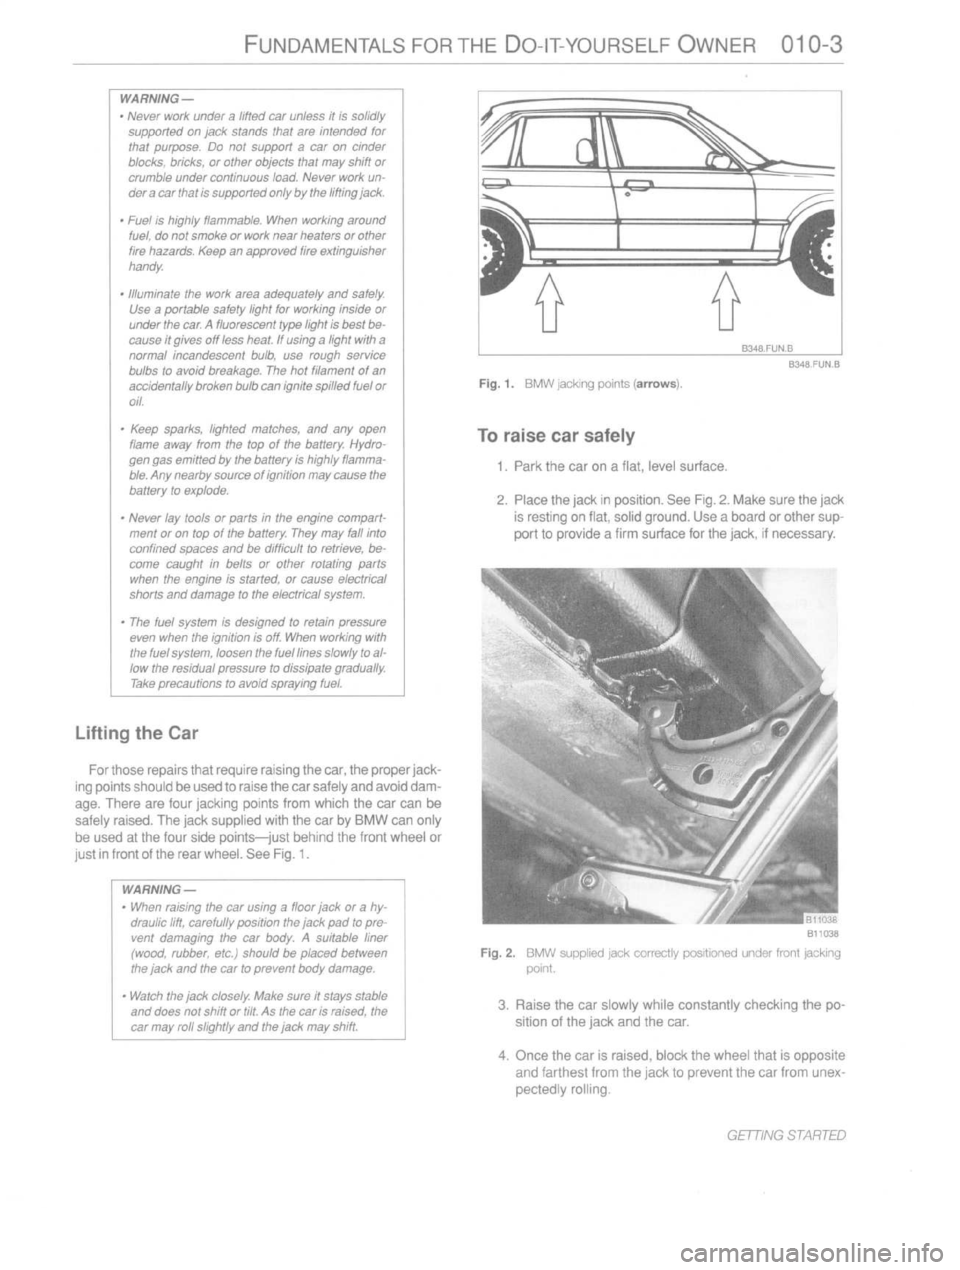 BMW 525i 1989 E34 Workshop Manual 